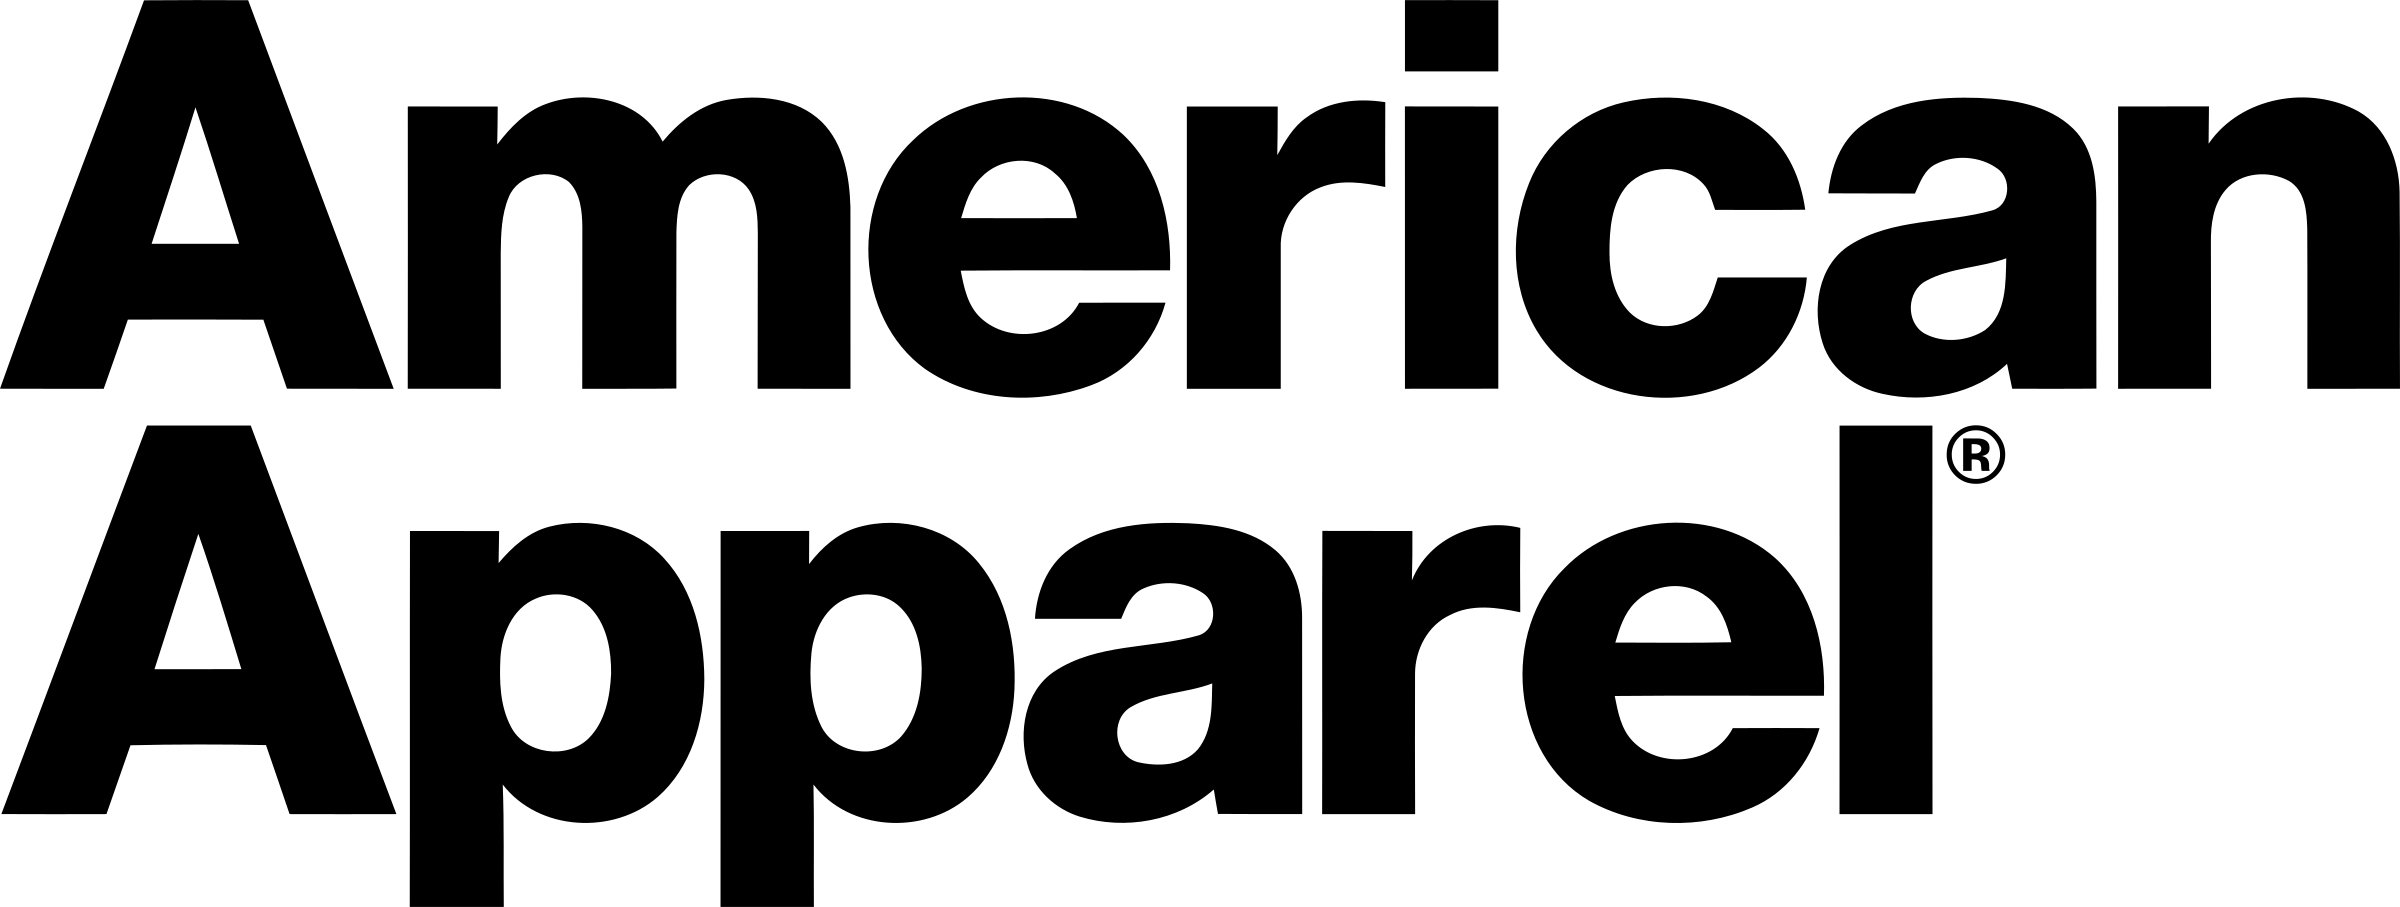 American Apparel Brand Logo - American Apparel Logo SVG Vector & PNG Transparent - Vector Logo Supply